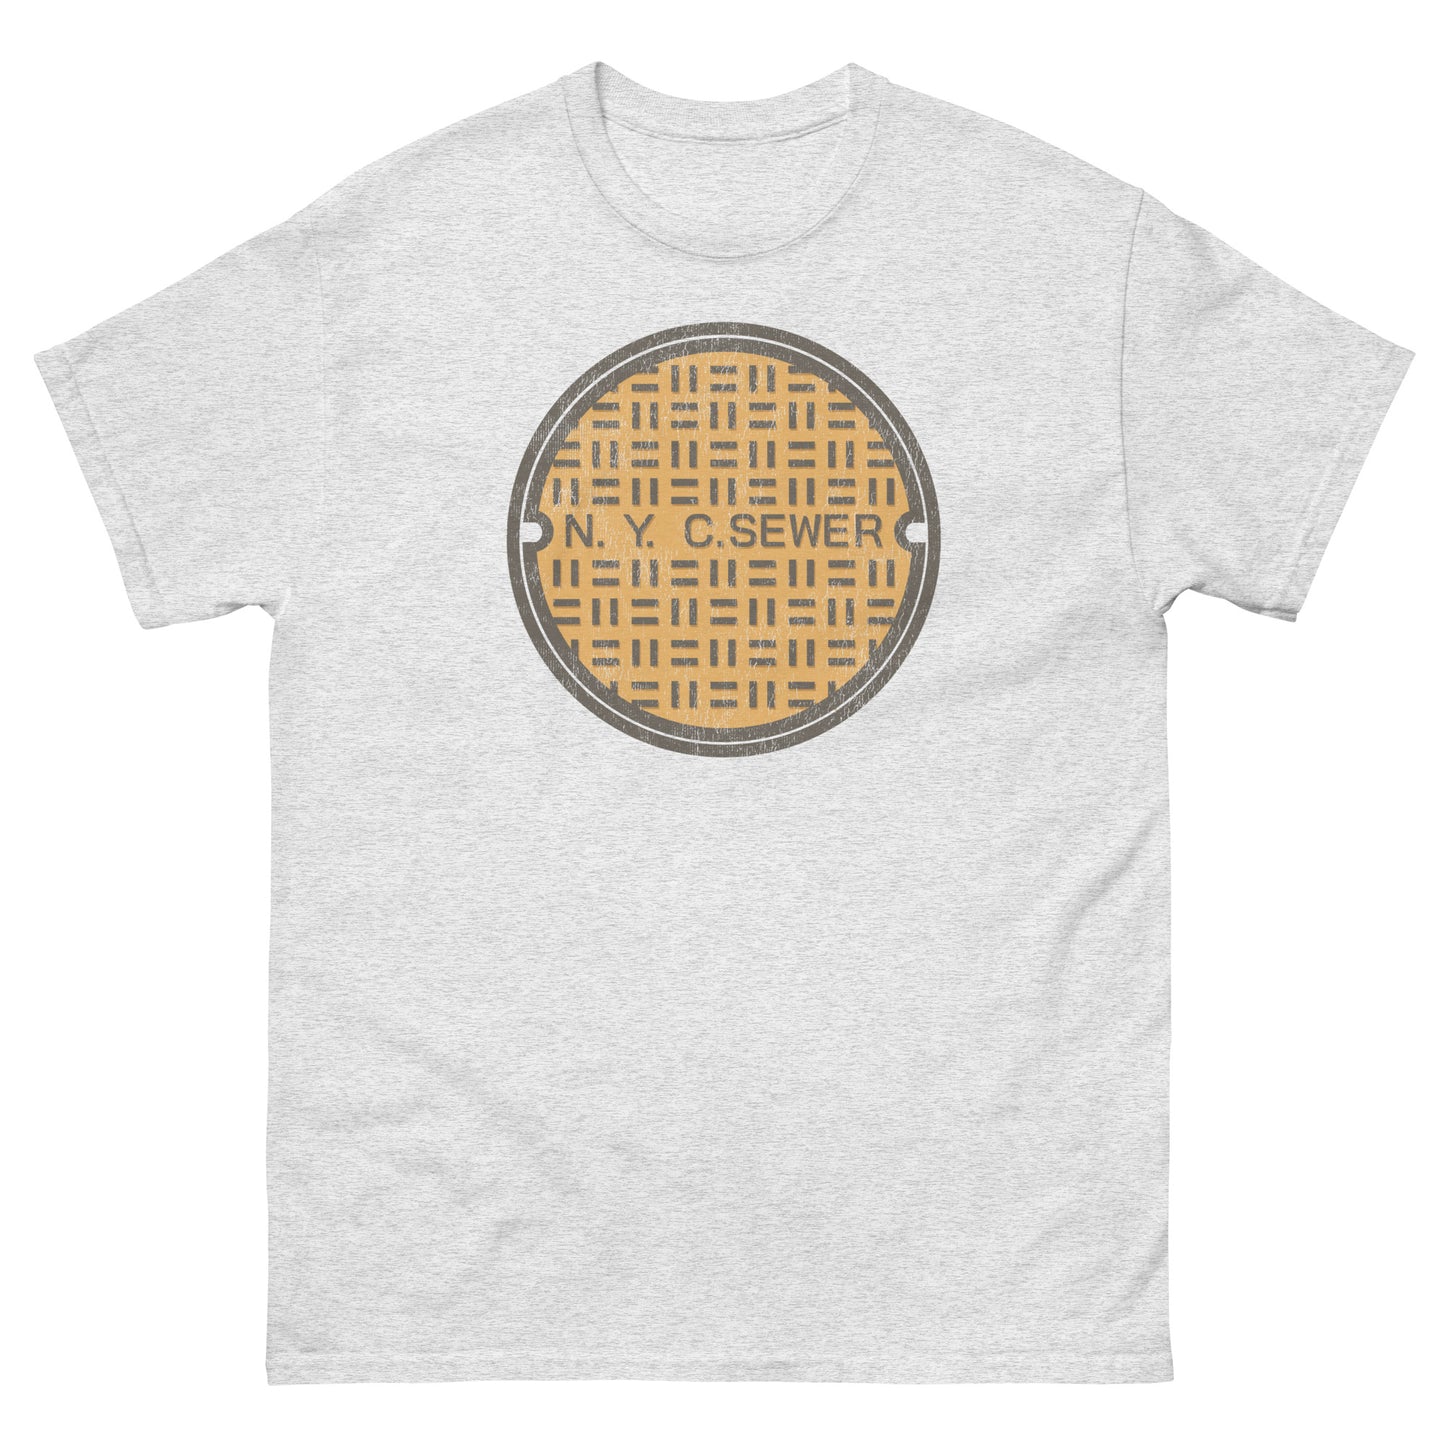 N.Y.C Sewer Cap - Standard T-Shirt